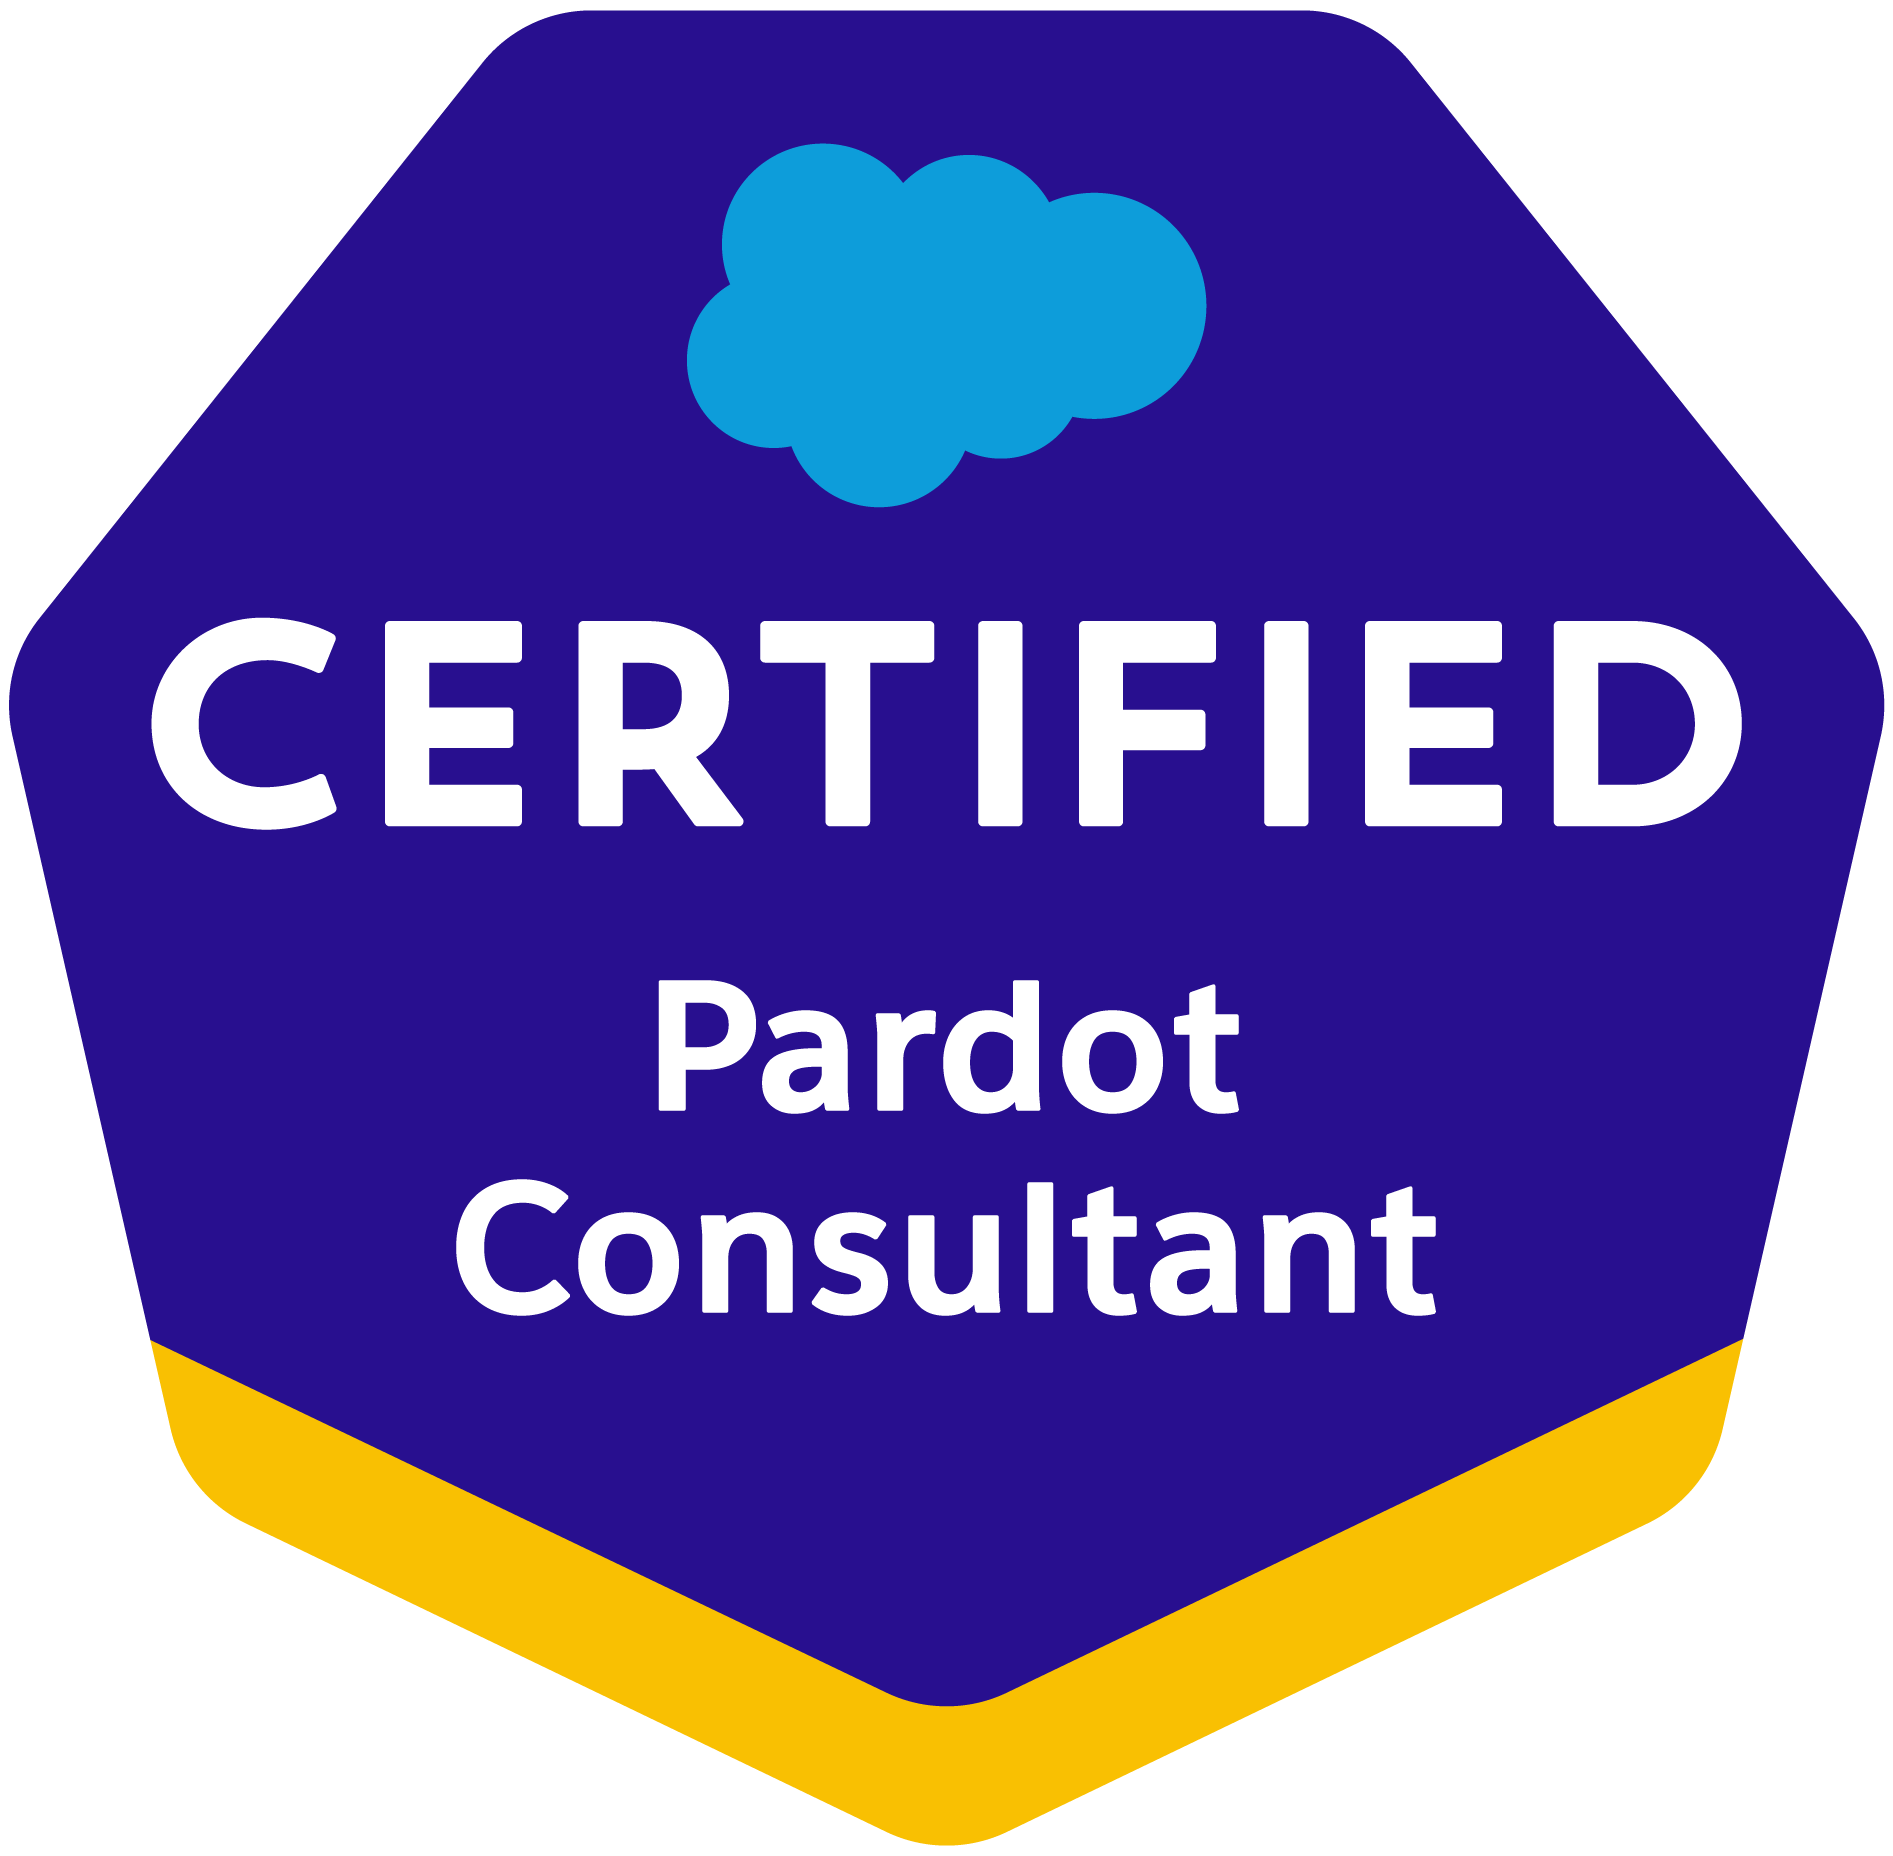 Pardot Consultant certification